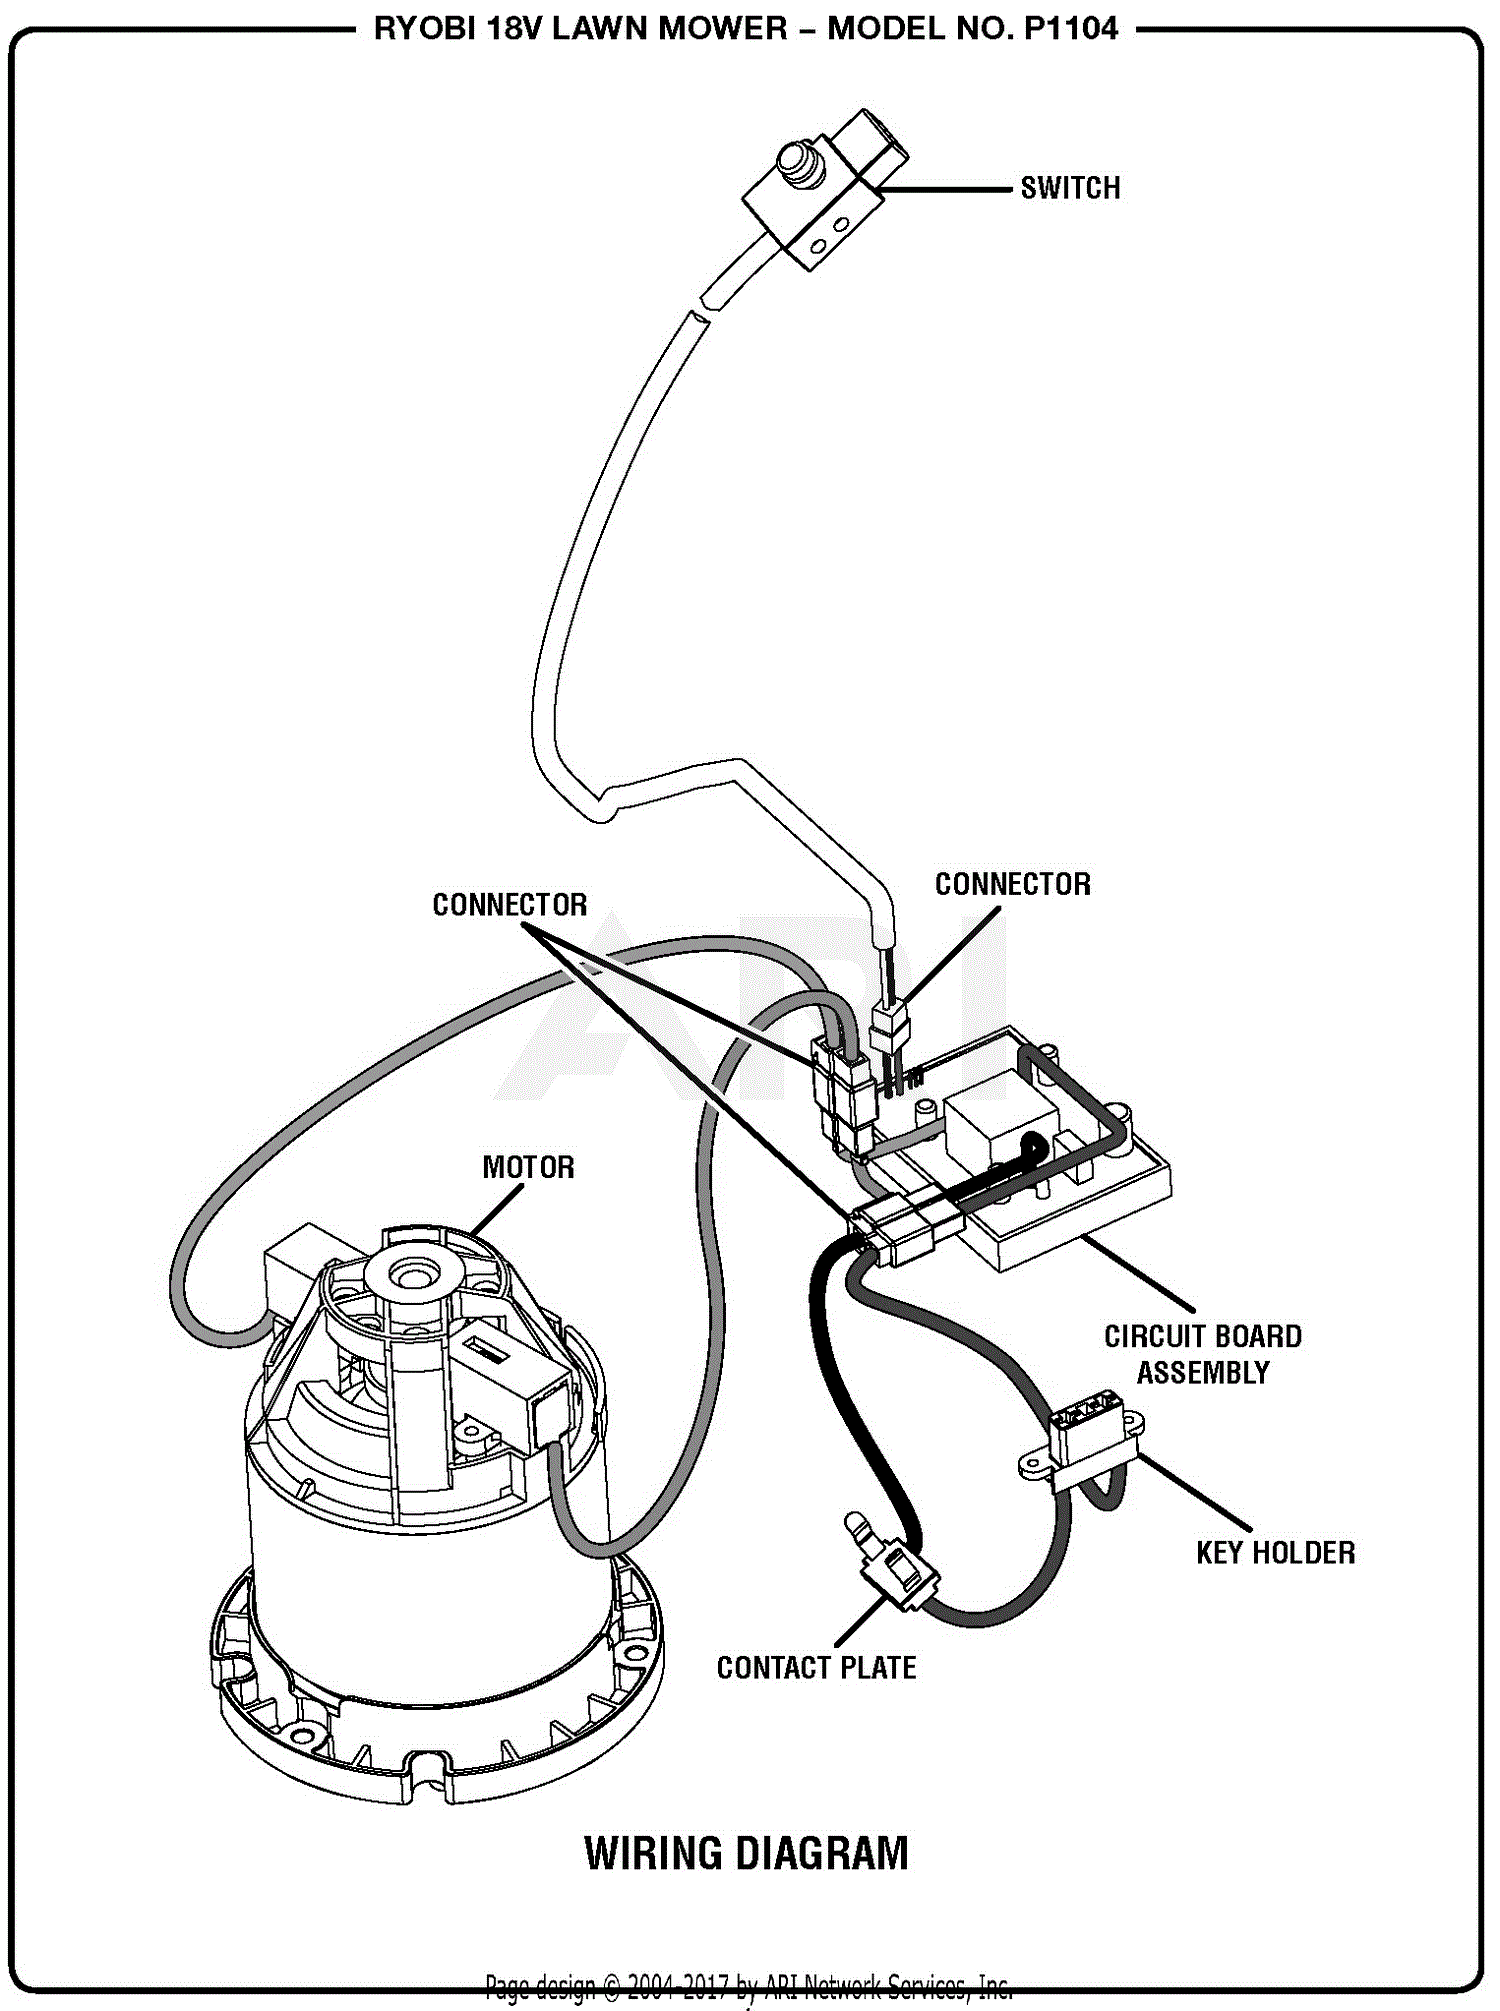 Homelite P1104 18 Volt Lawn Mower Mfg. No. 099323001 6-12-18 (Rev:01) Parts Diagram for Wiring